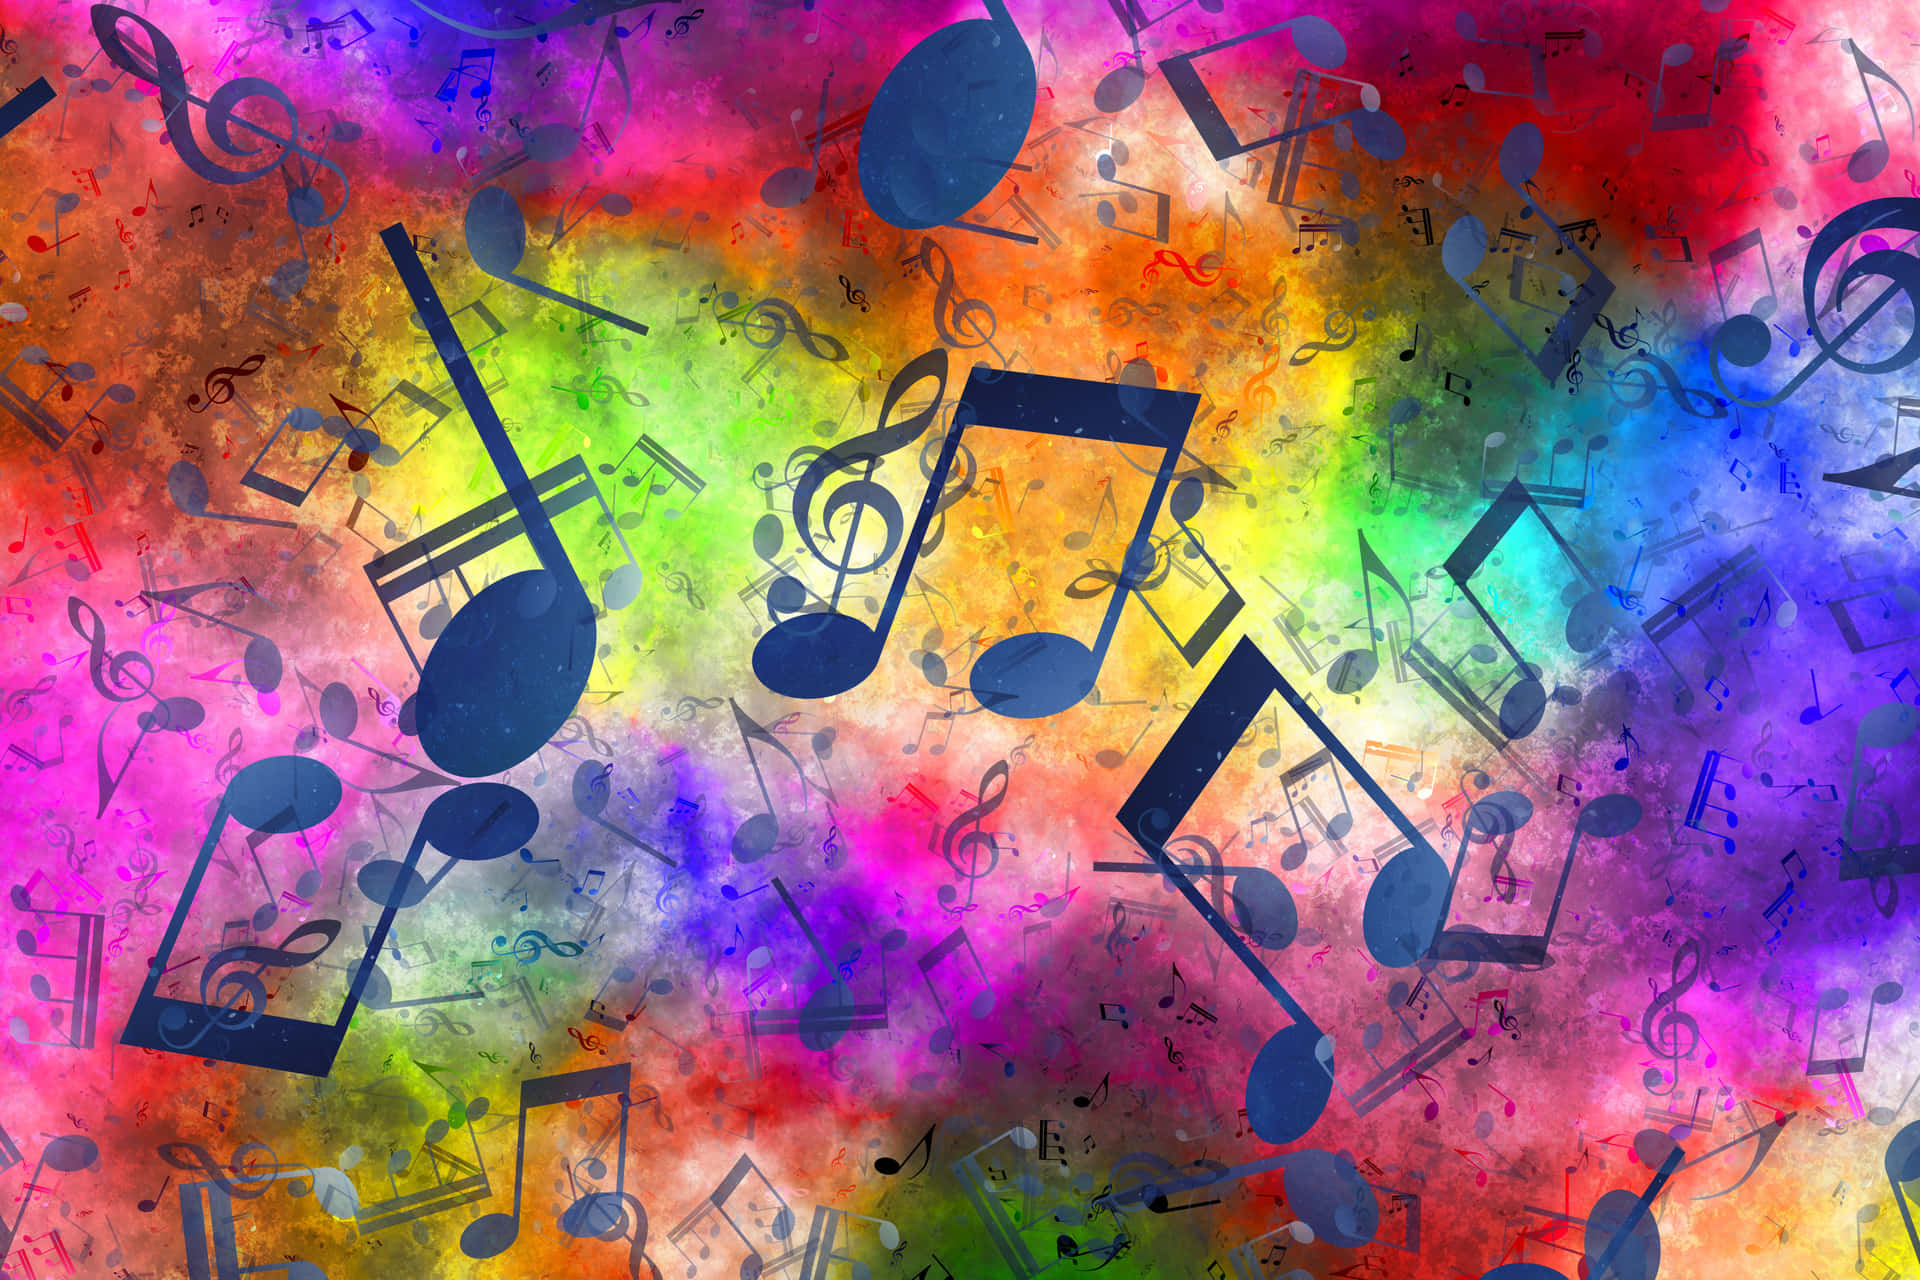 rainbow music wallpapers